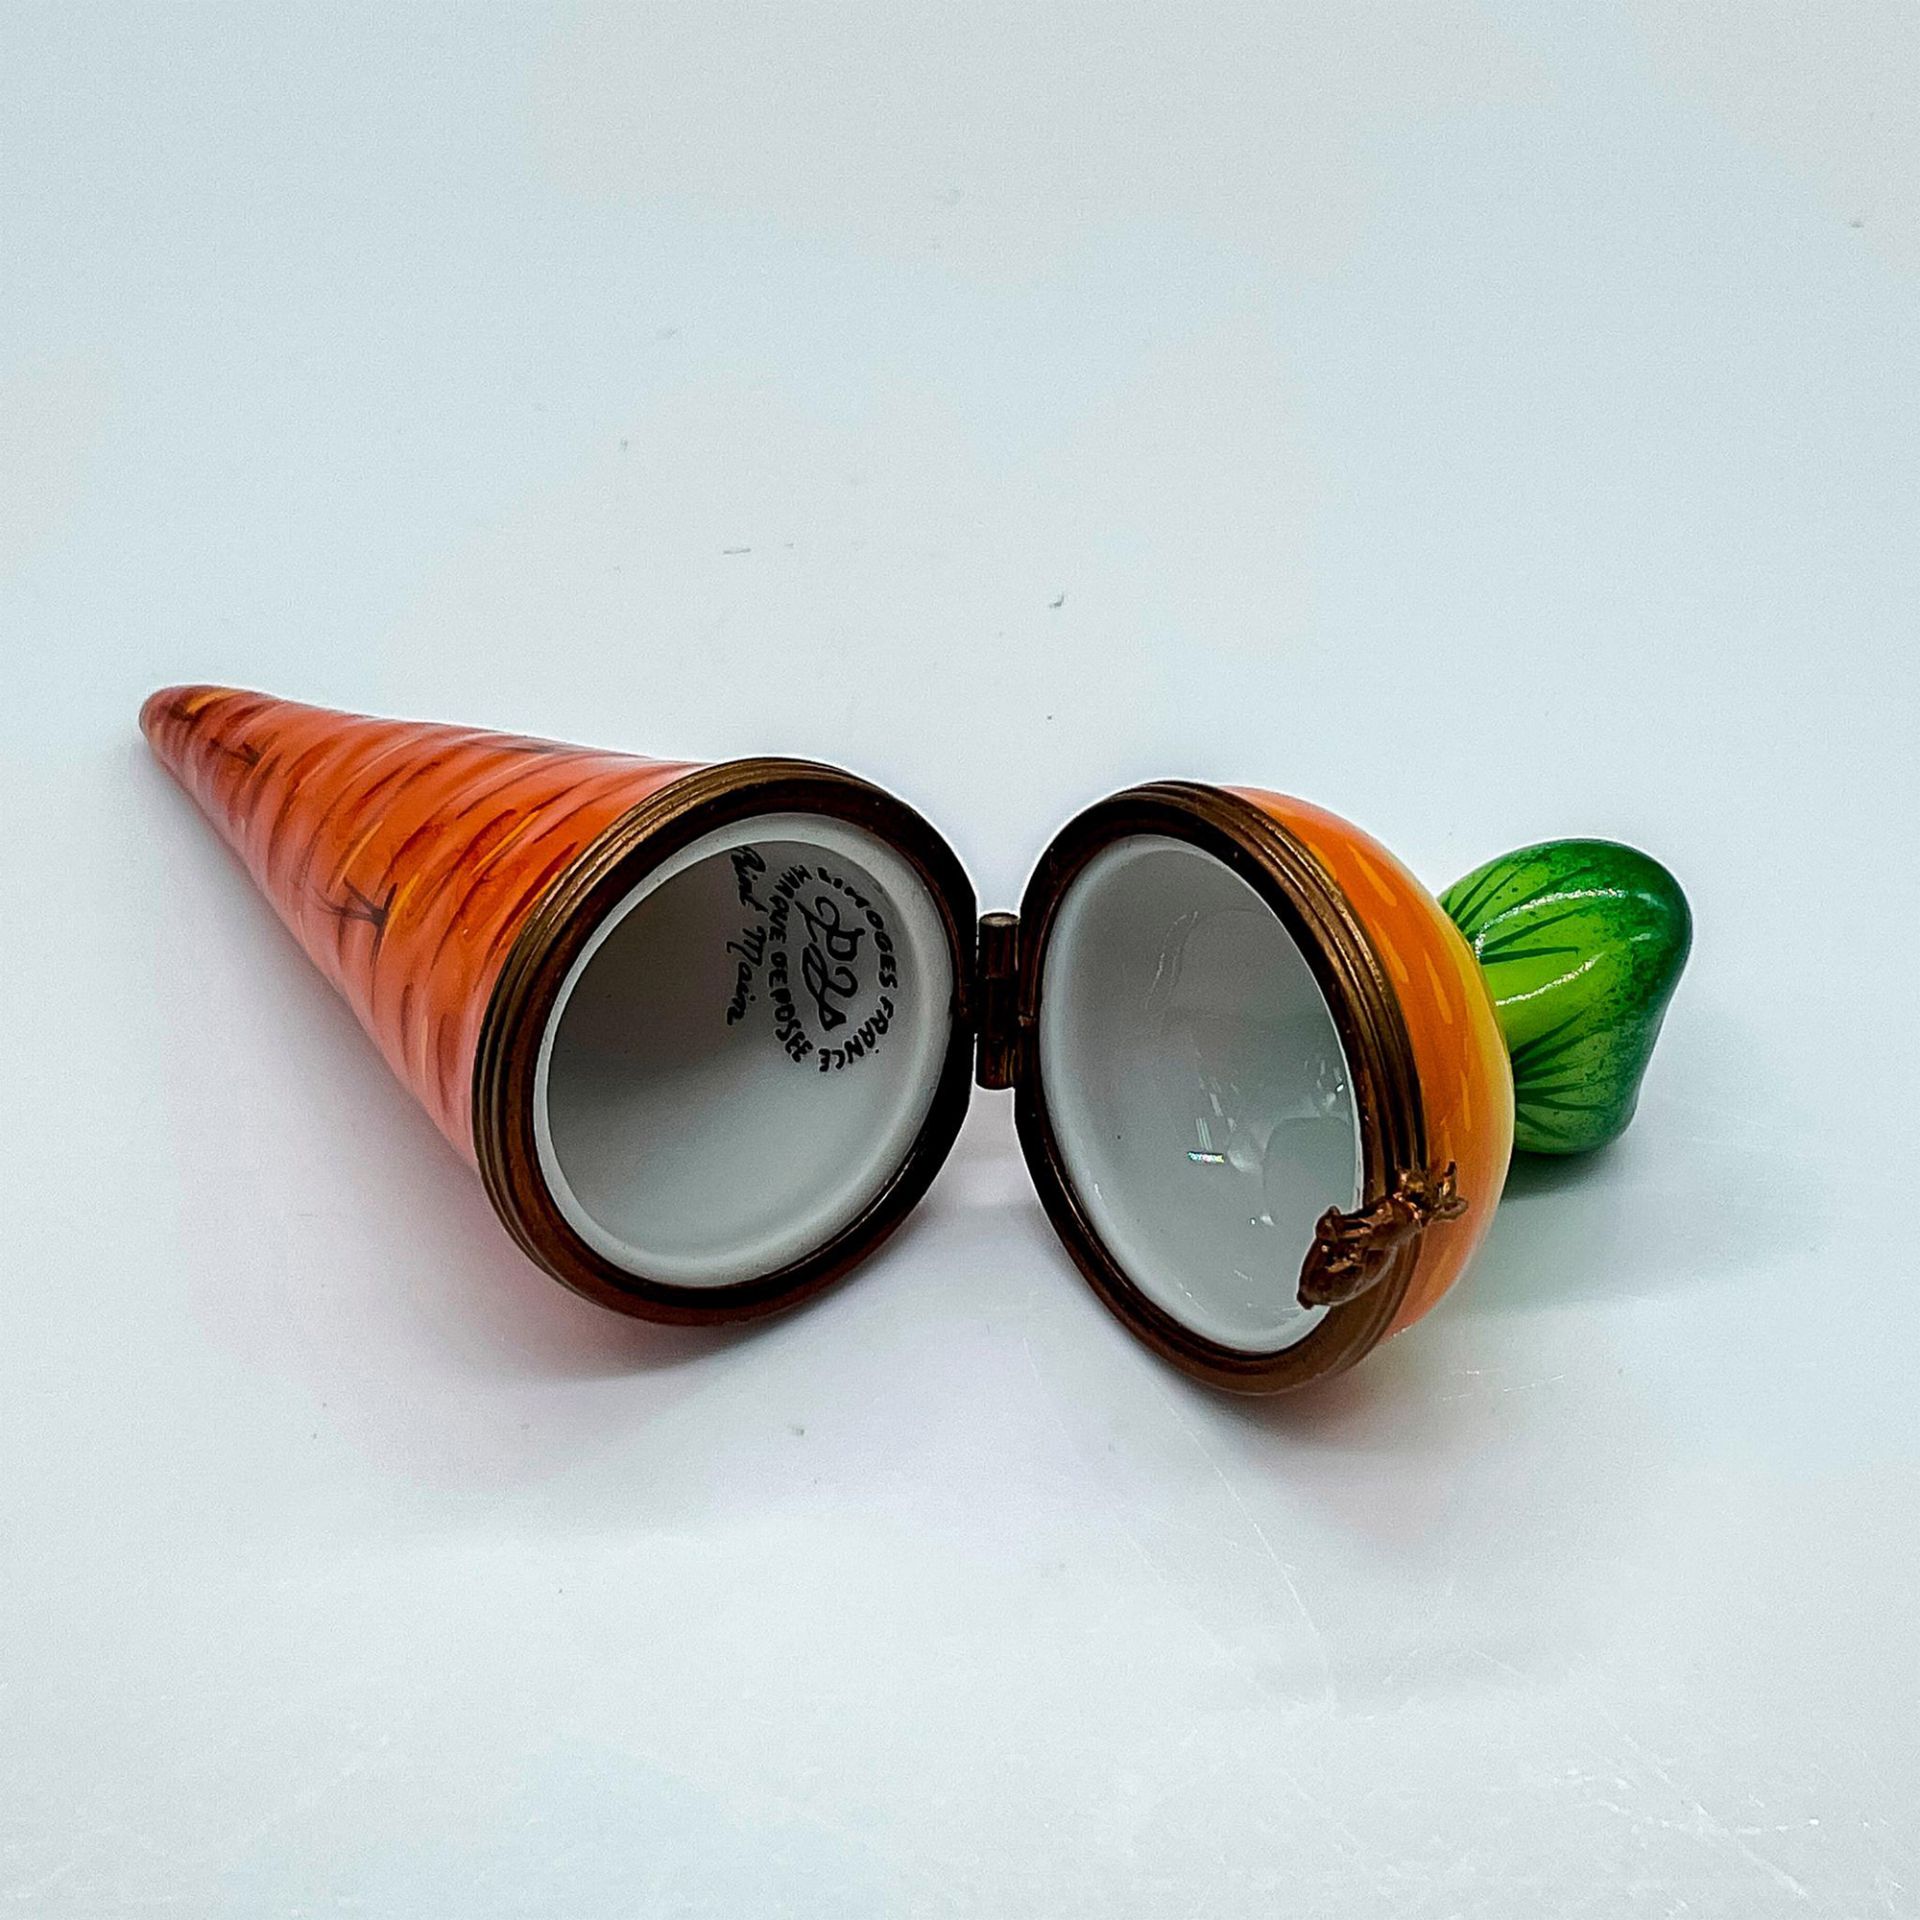 Limoges PV Porcelain Carrot Box - Image 2 of 2